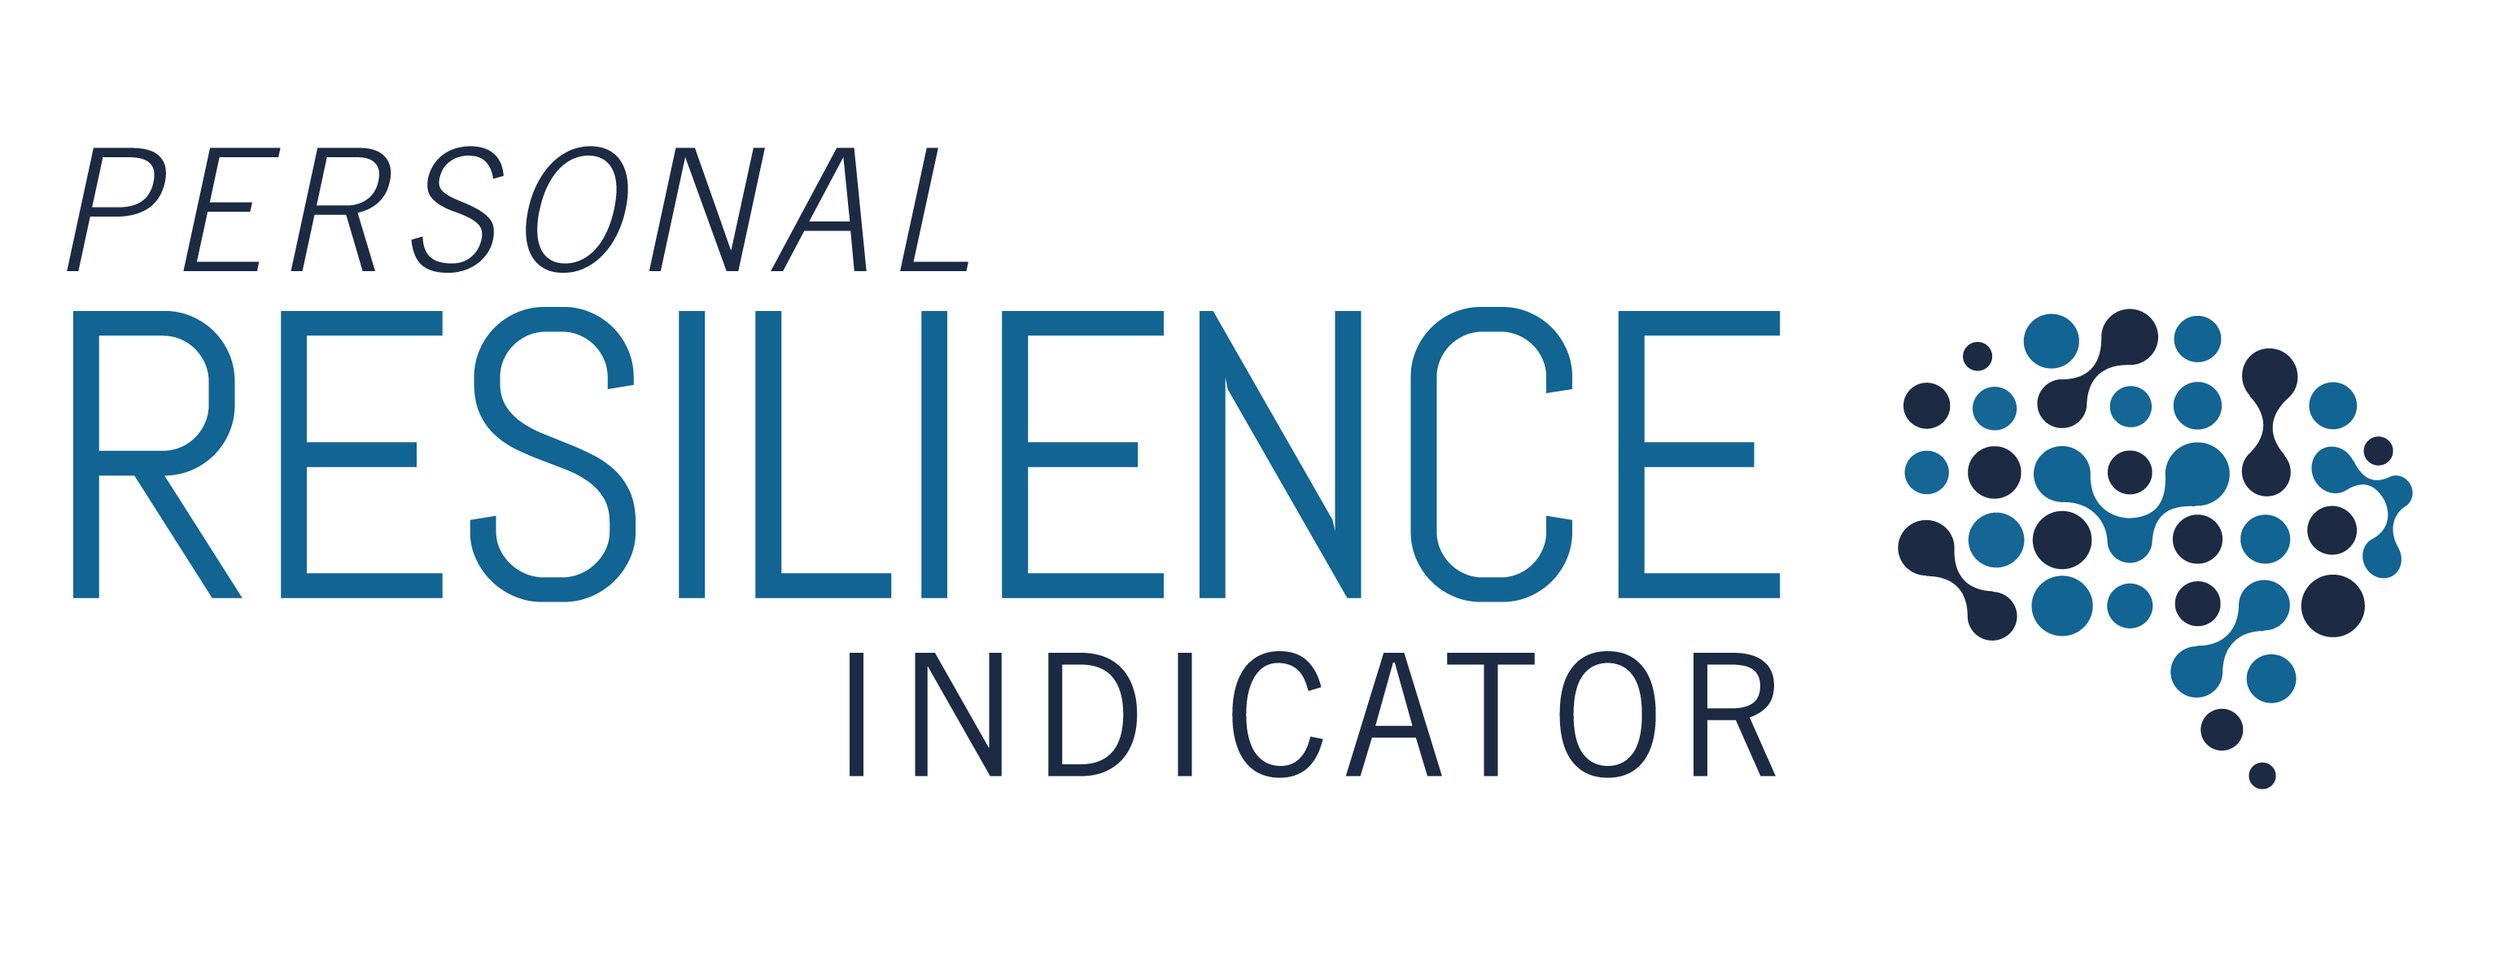 _352975 - Personal Resilience Indicator - logo-03.jpg